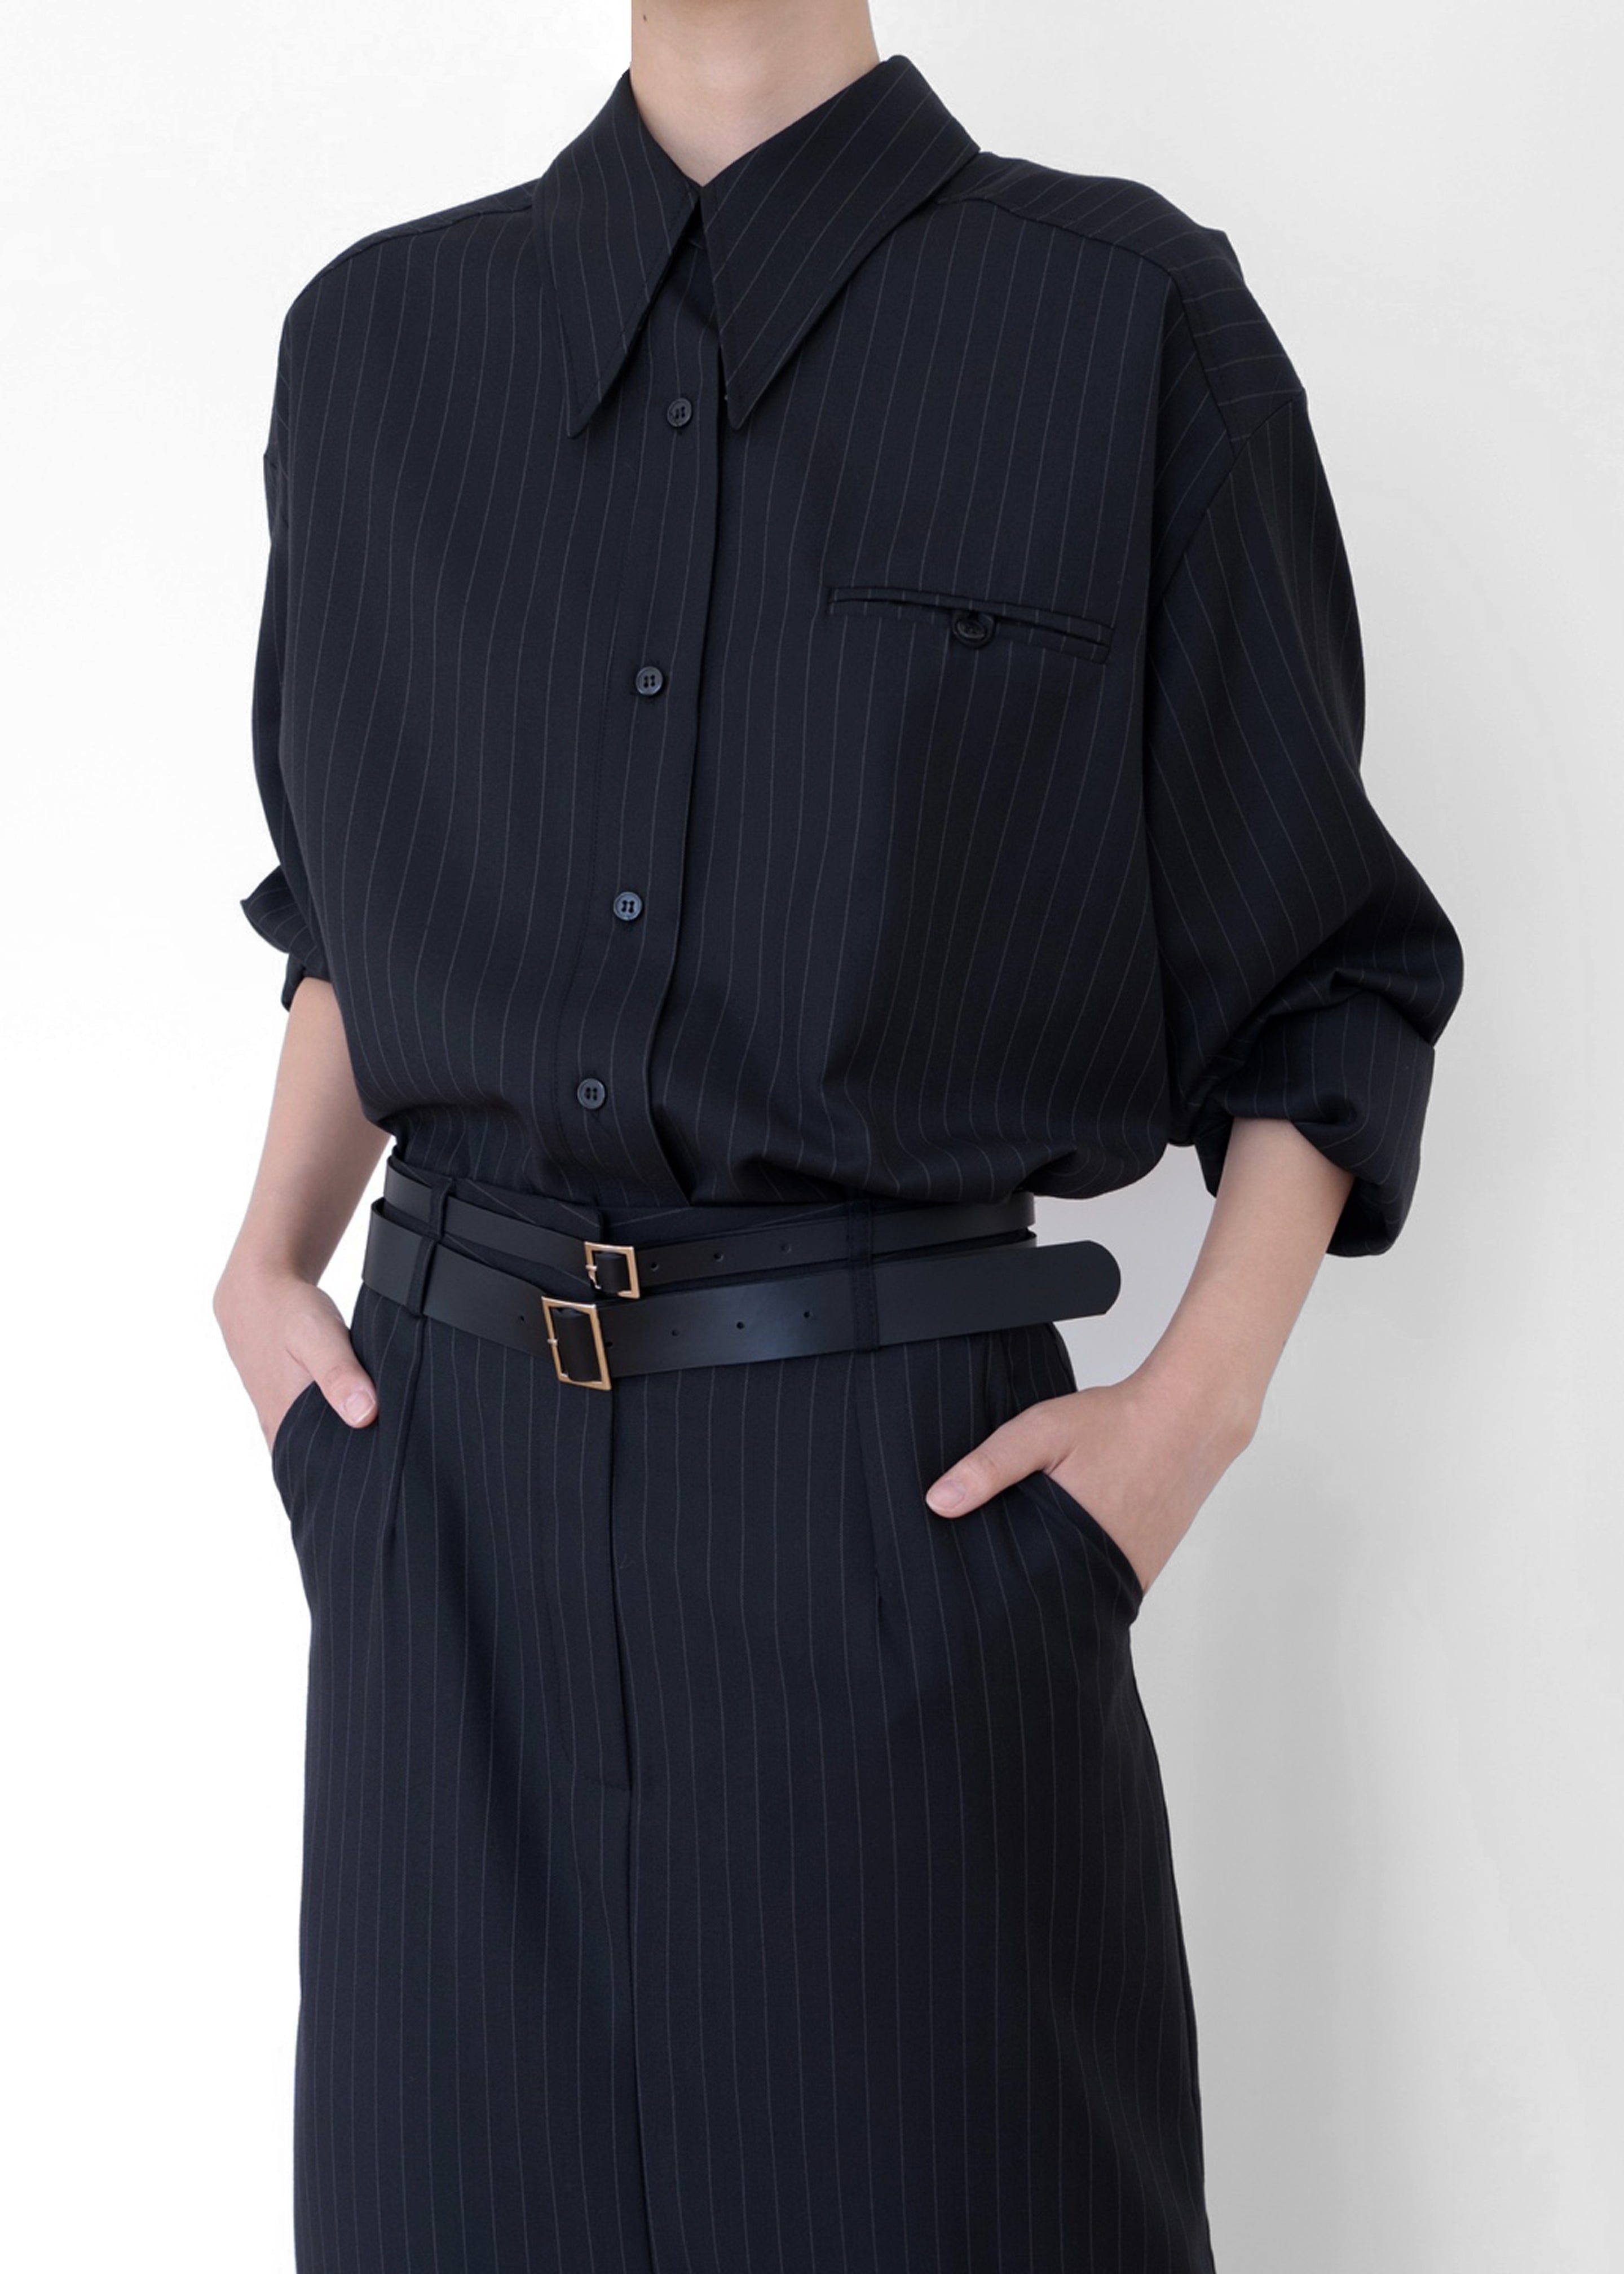 Kerry Button Up Shirt - Black Pinstripe - 18